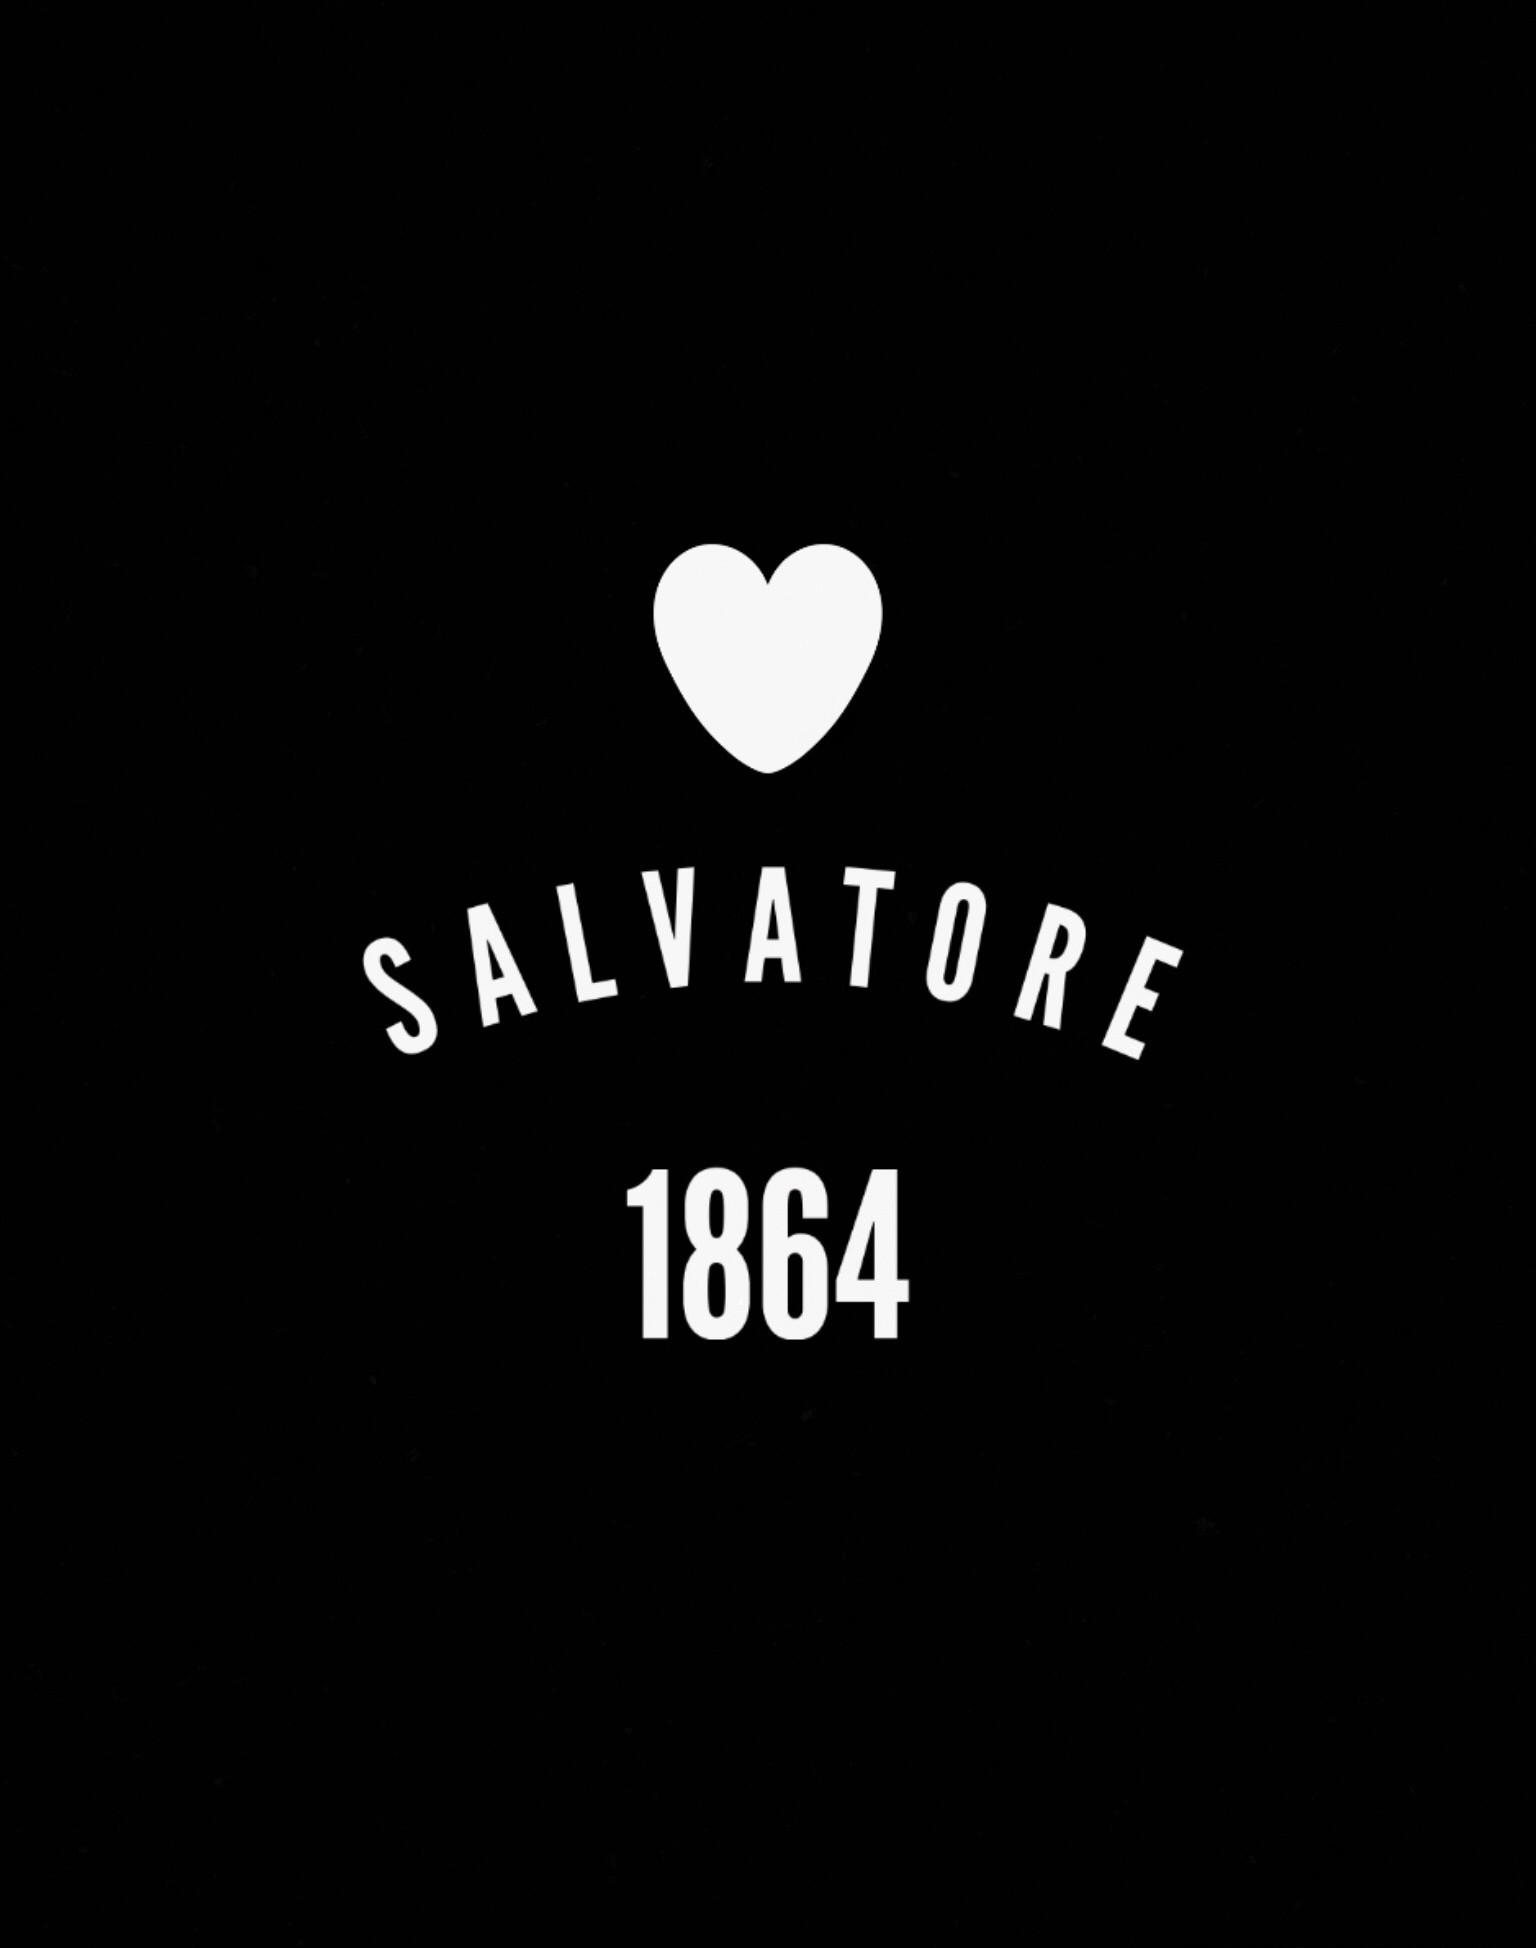 1536x1948 The Vampire Diaries, Vampire Diaries Wallpaper, Vampire Dairies, Damond  Salvatore, Stefan Salvatore, Paul Wesley, Iphone Wallpapers, Ian  Somerhalder, ...